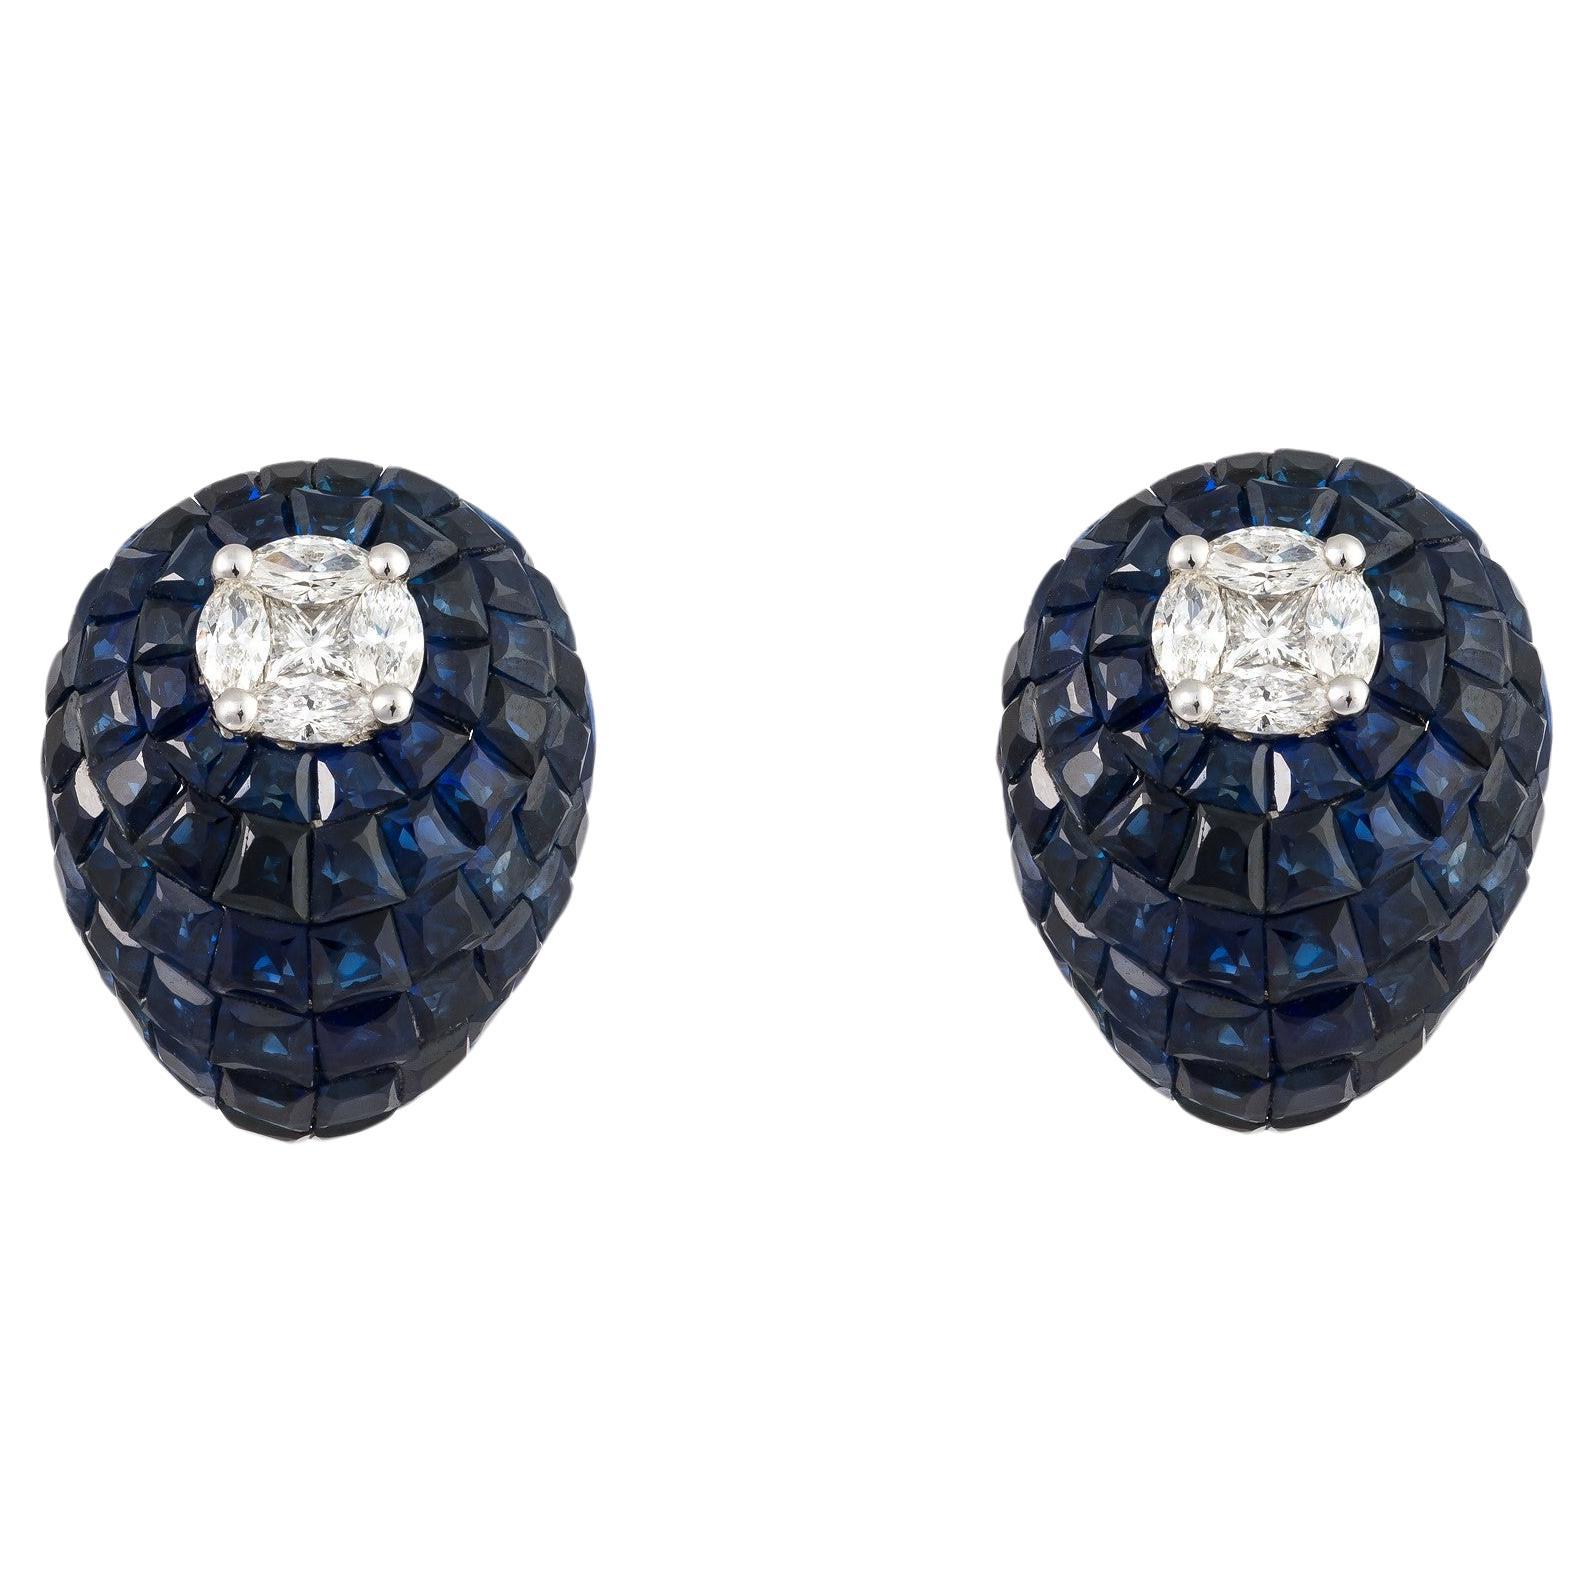 NWT $20, 800 Or 18KT Rare Gorgeous Blue Sapphire Diamond Bombe Earrings